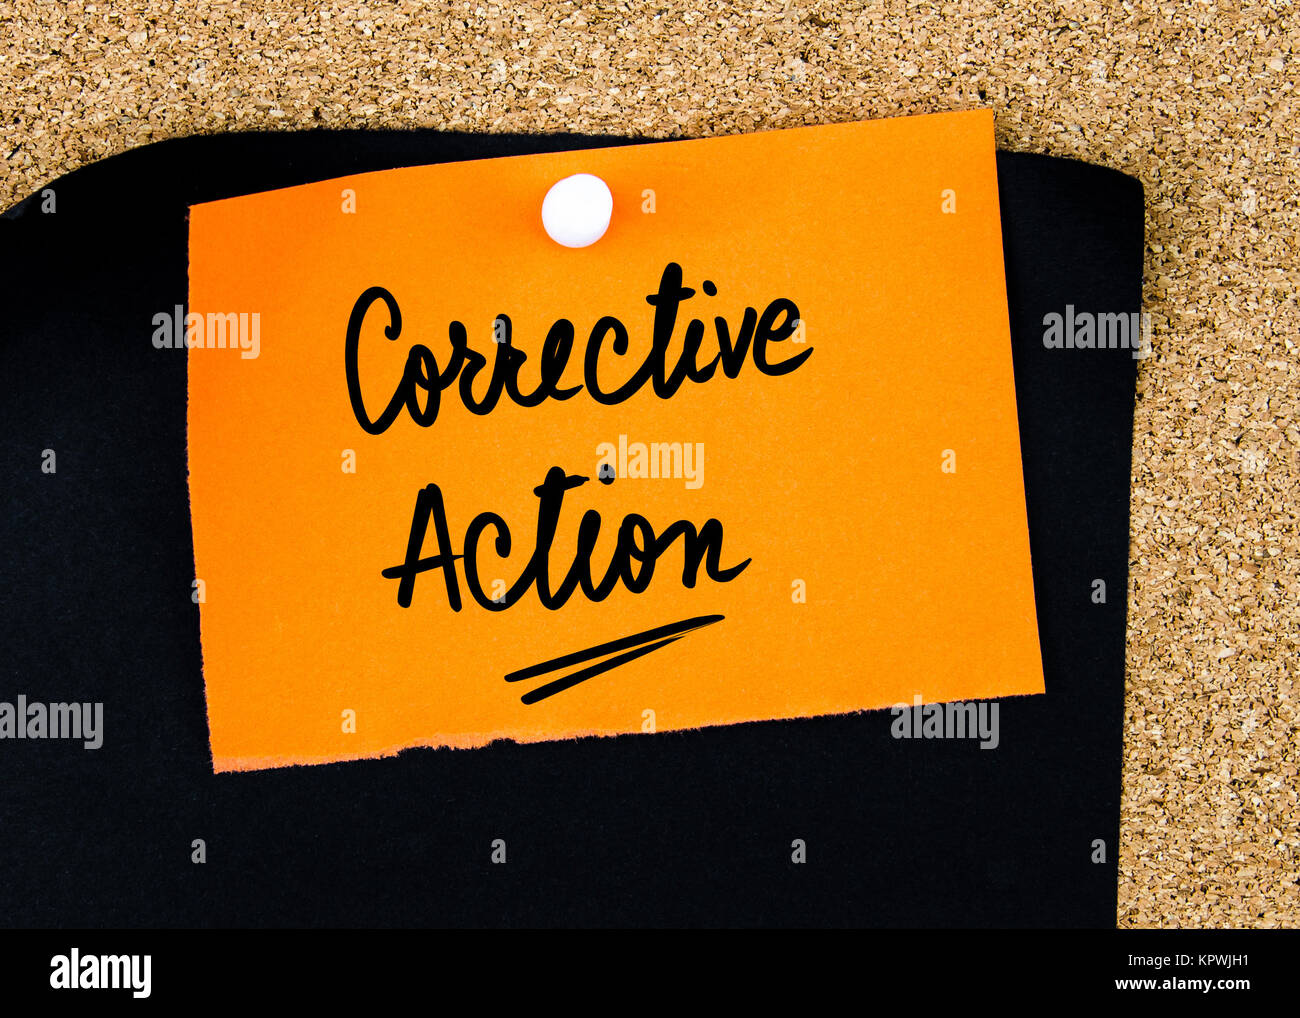 Corrective Action written on orange paper note Stock Photo